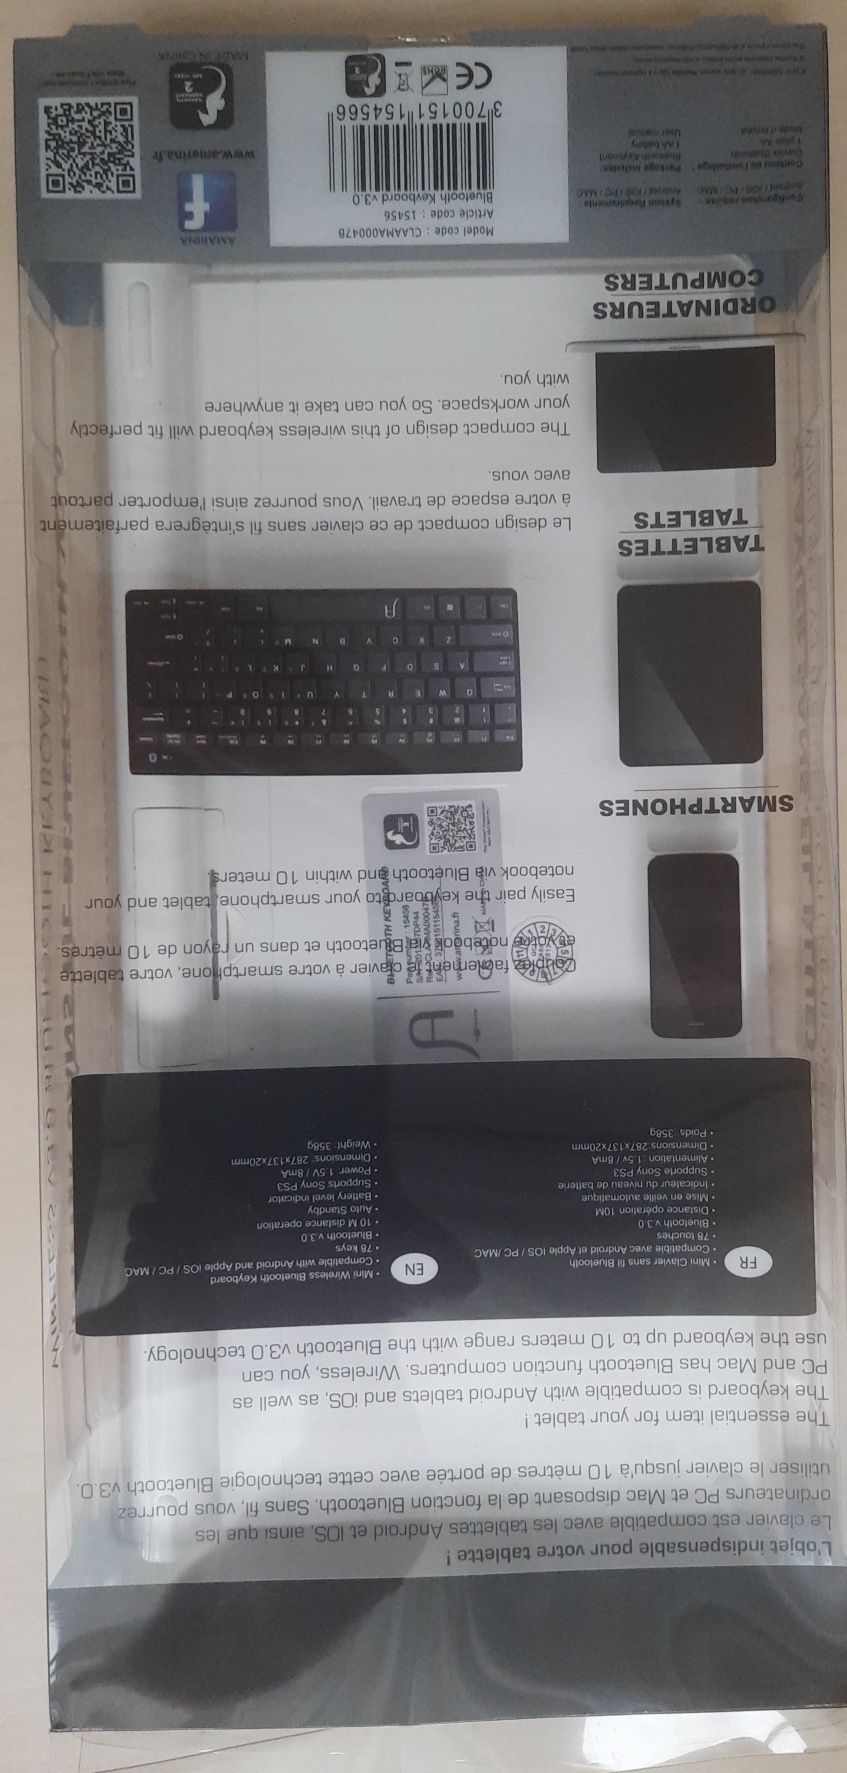 OFERTA - Mini-Tastatură wireless cu Bluetooth